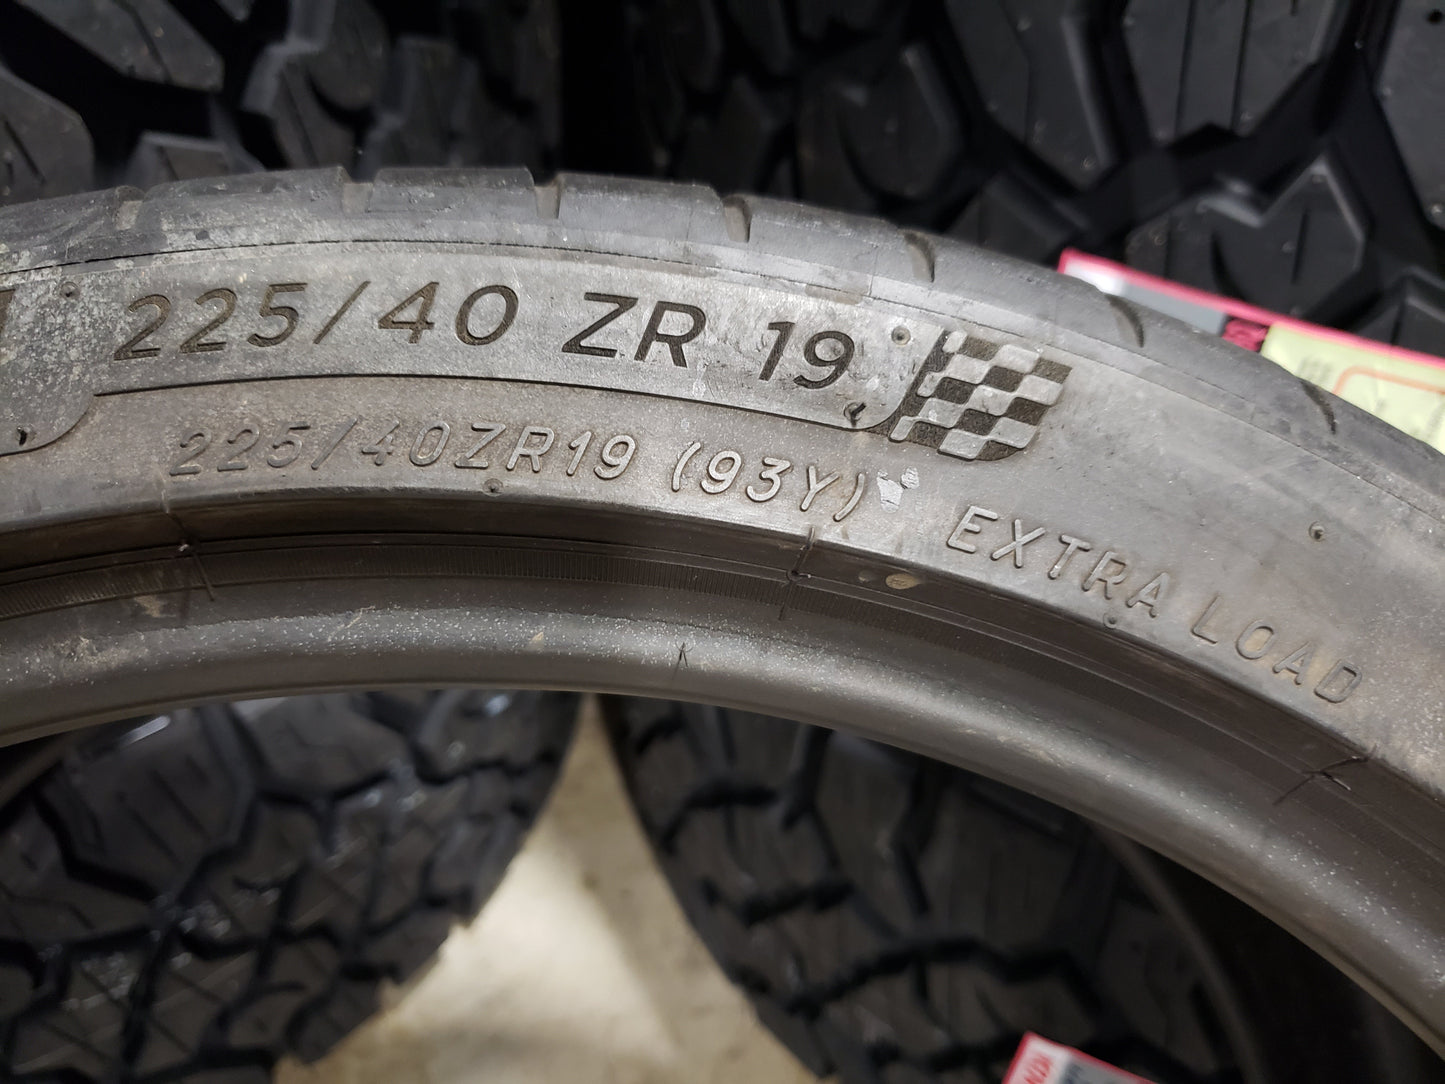 SINGLE 225/40R19 Michelin Pilot Sport 4 S 93 Y XL - Used Tires